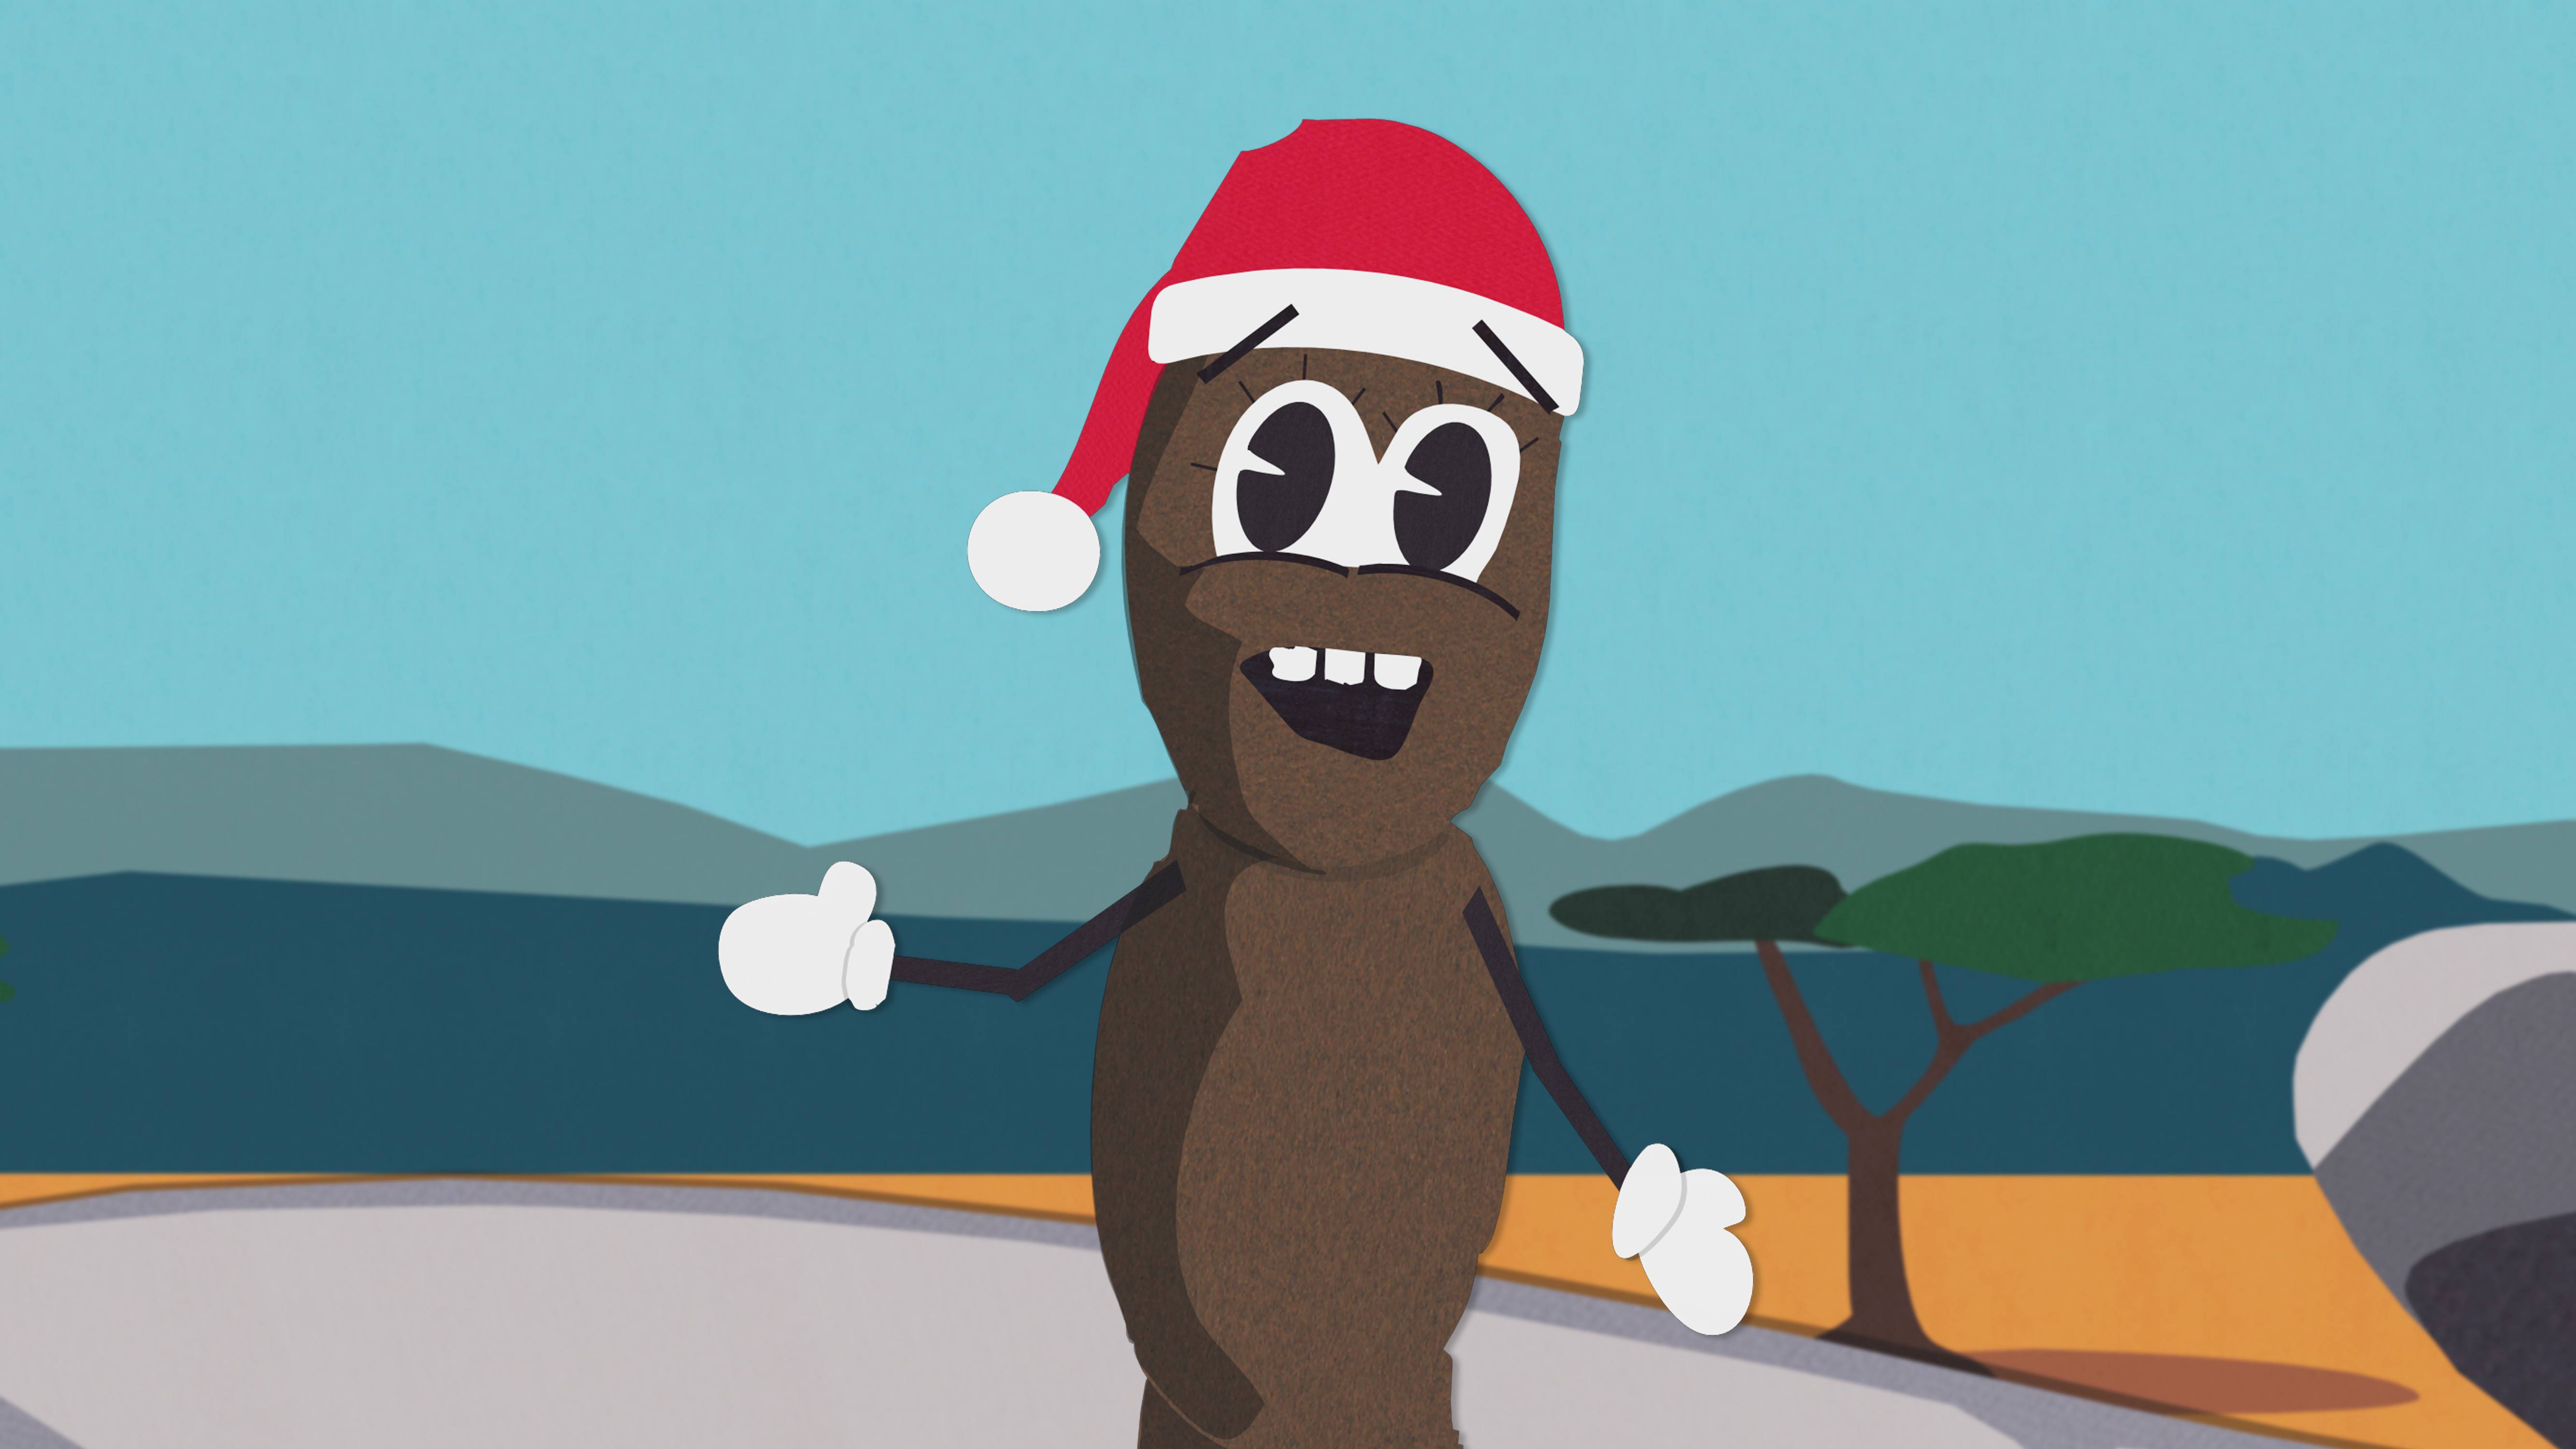 South Park Mr.Hankey crazy boxer Christmas - Depop